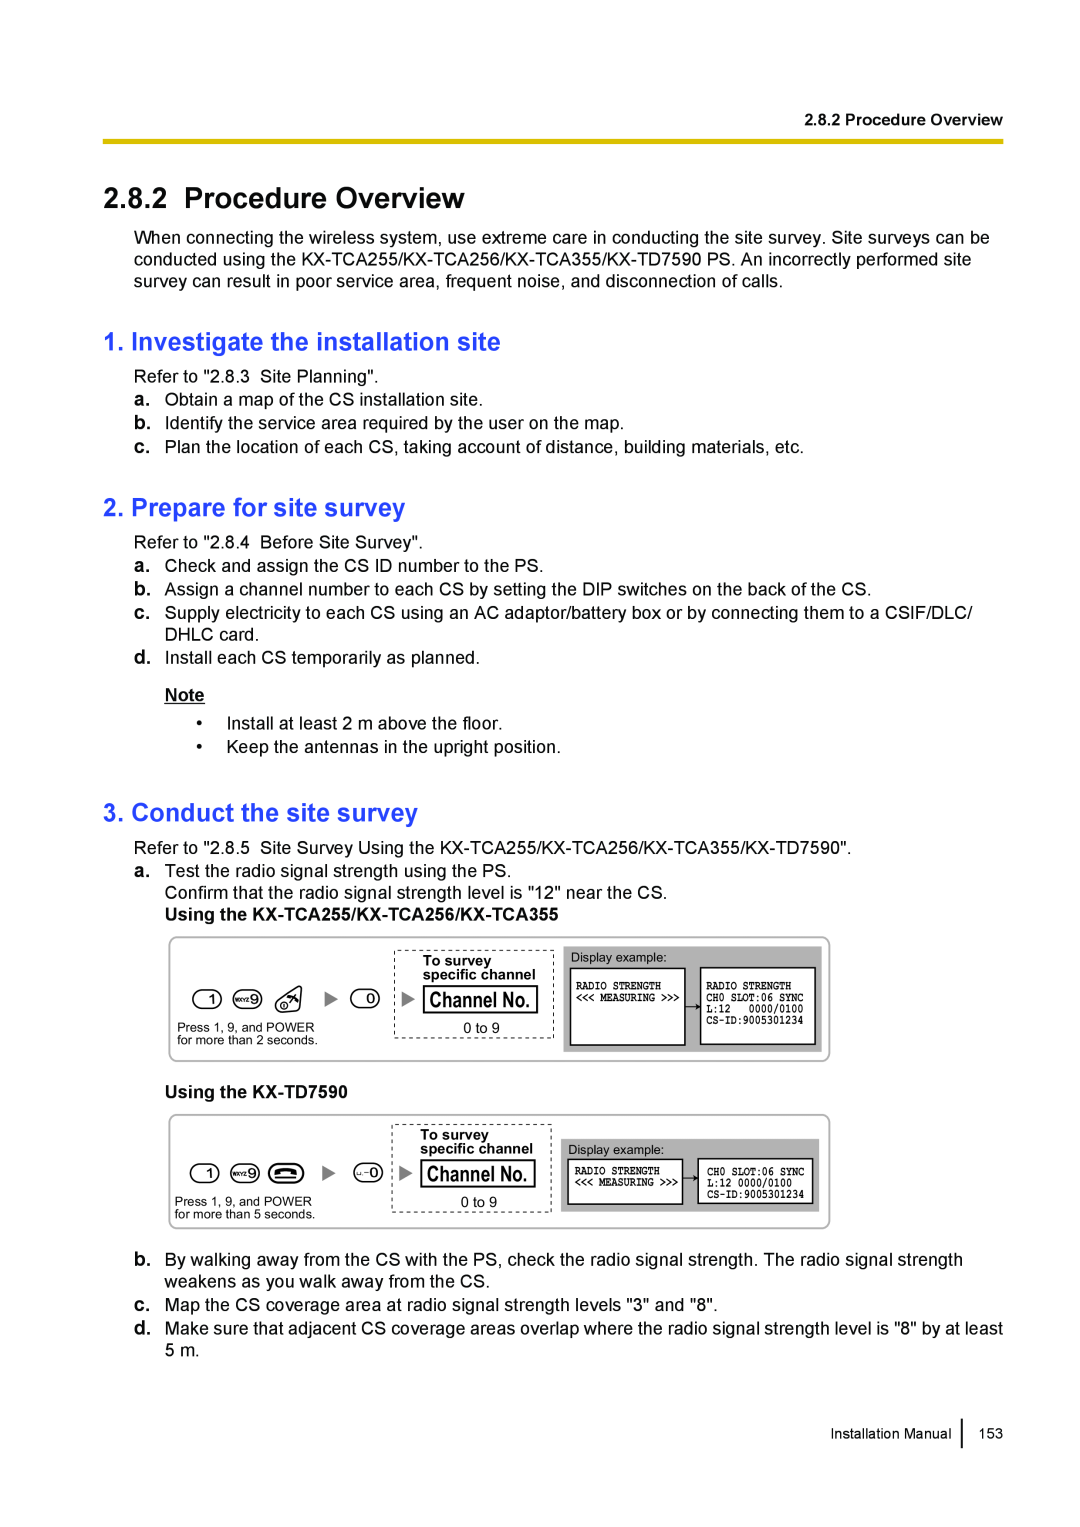 Panasonic KX-TDA100 Procedure Overview, Investigate the installation site, Prepare for site survey, Channel No 